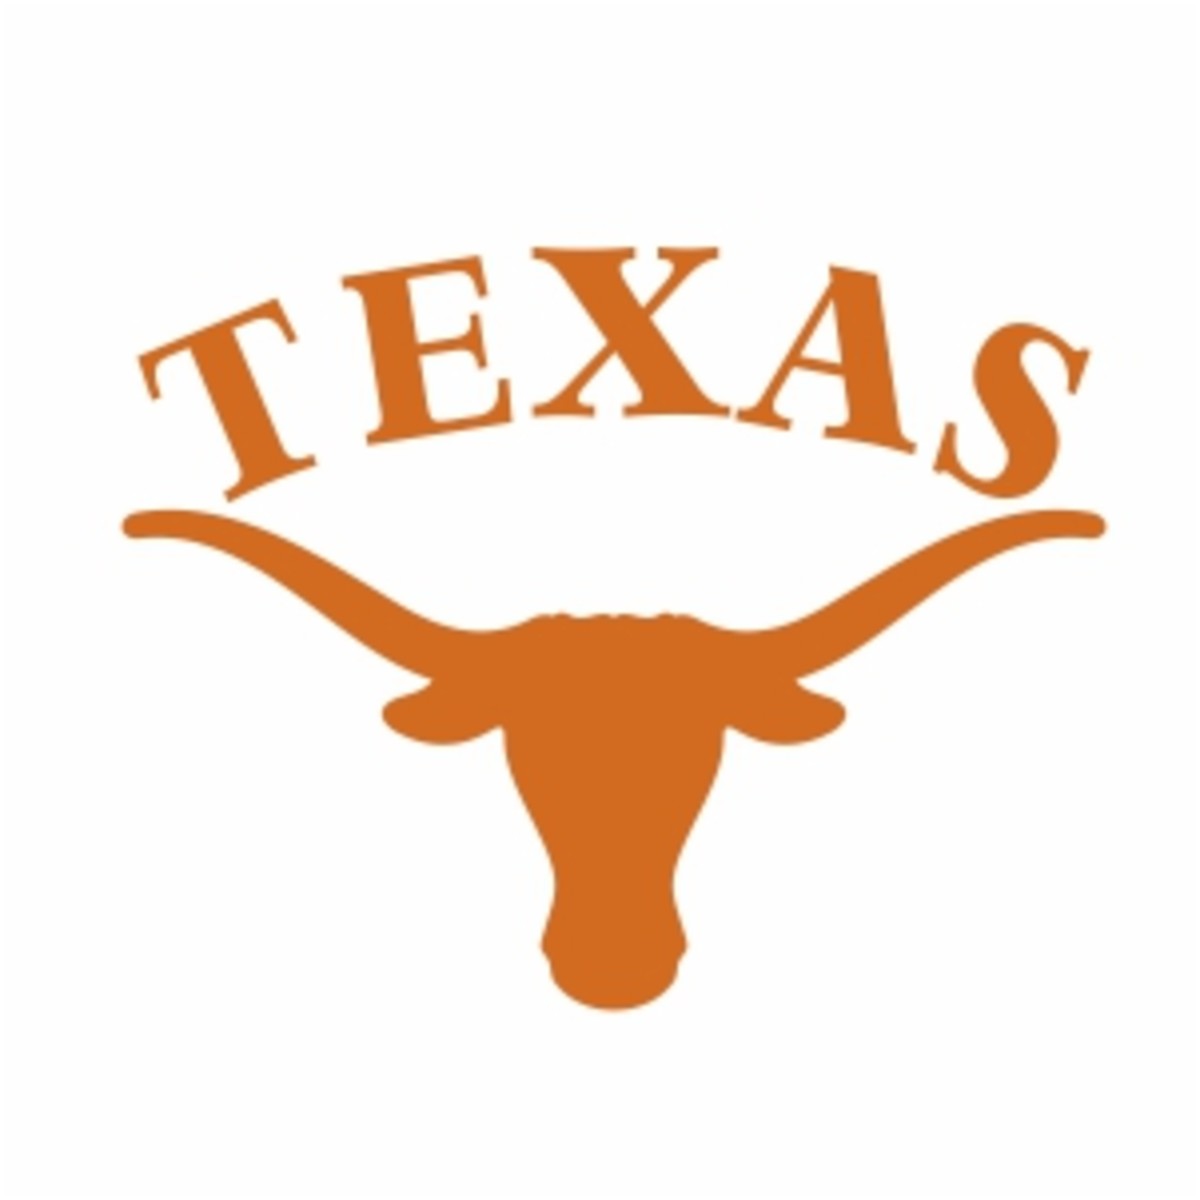 Texas longhorns logo